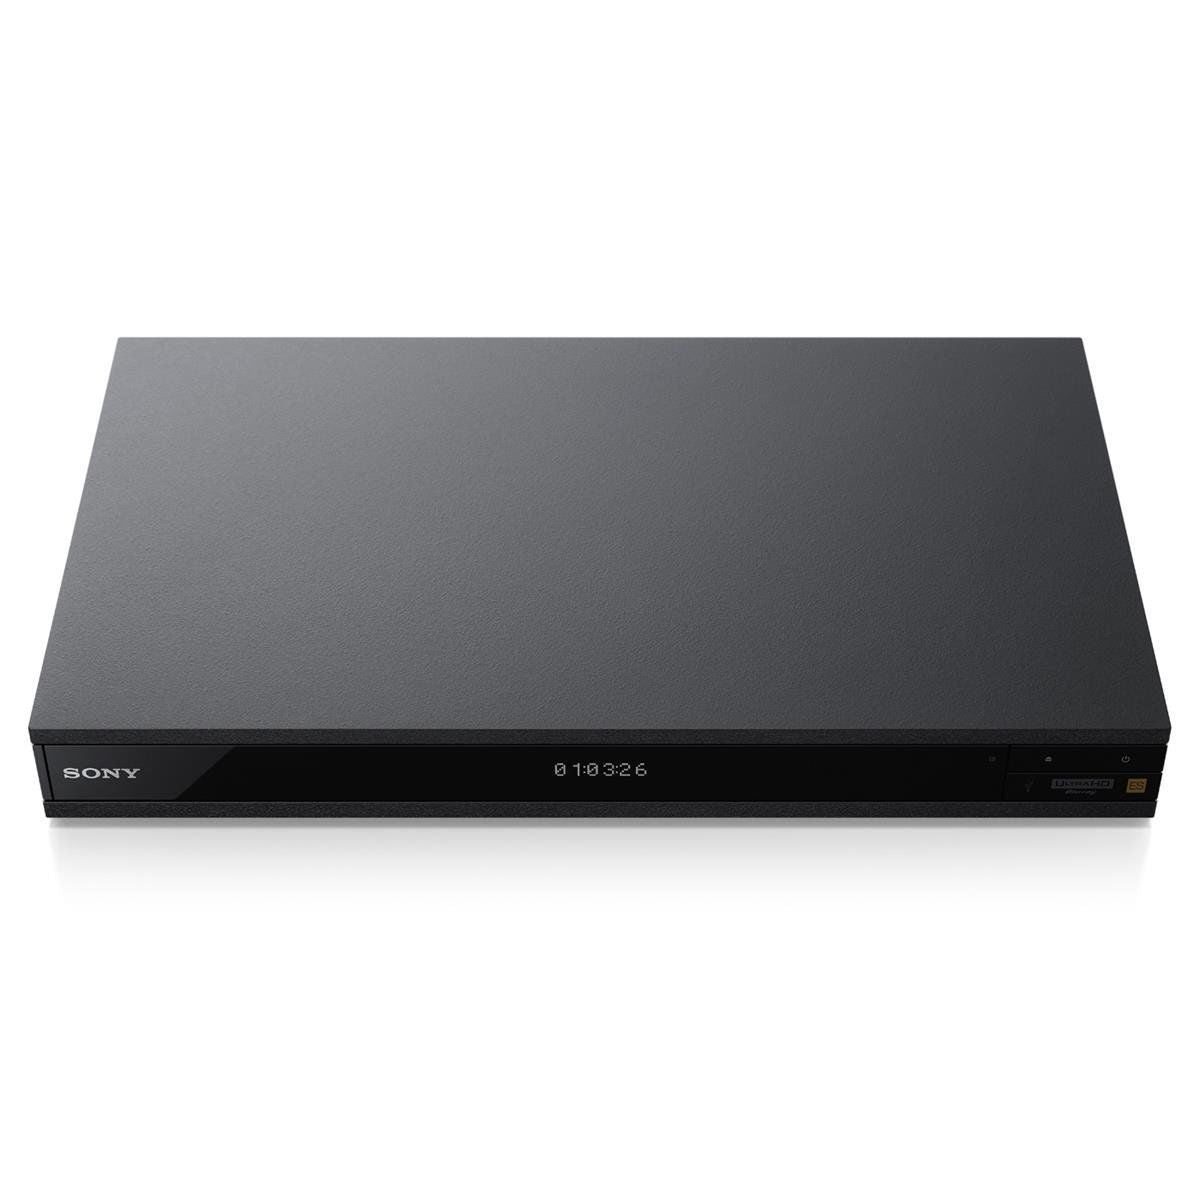 Sony UBPX1000ES 4K Ultra HD Blu-Ray Disc Player